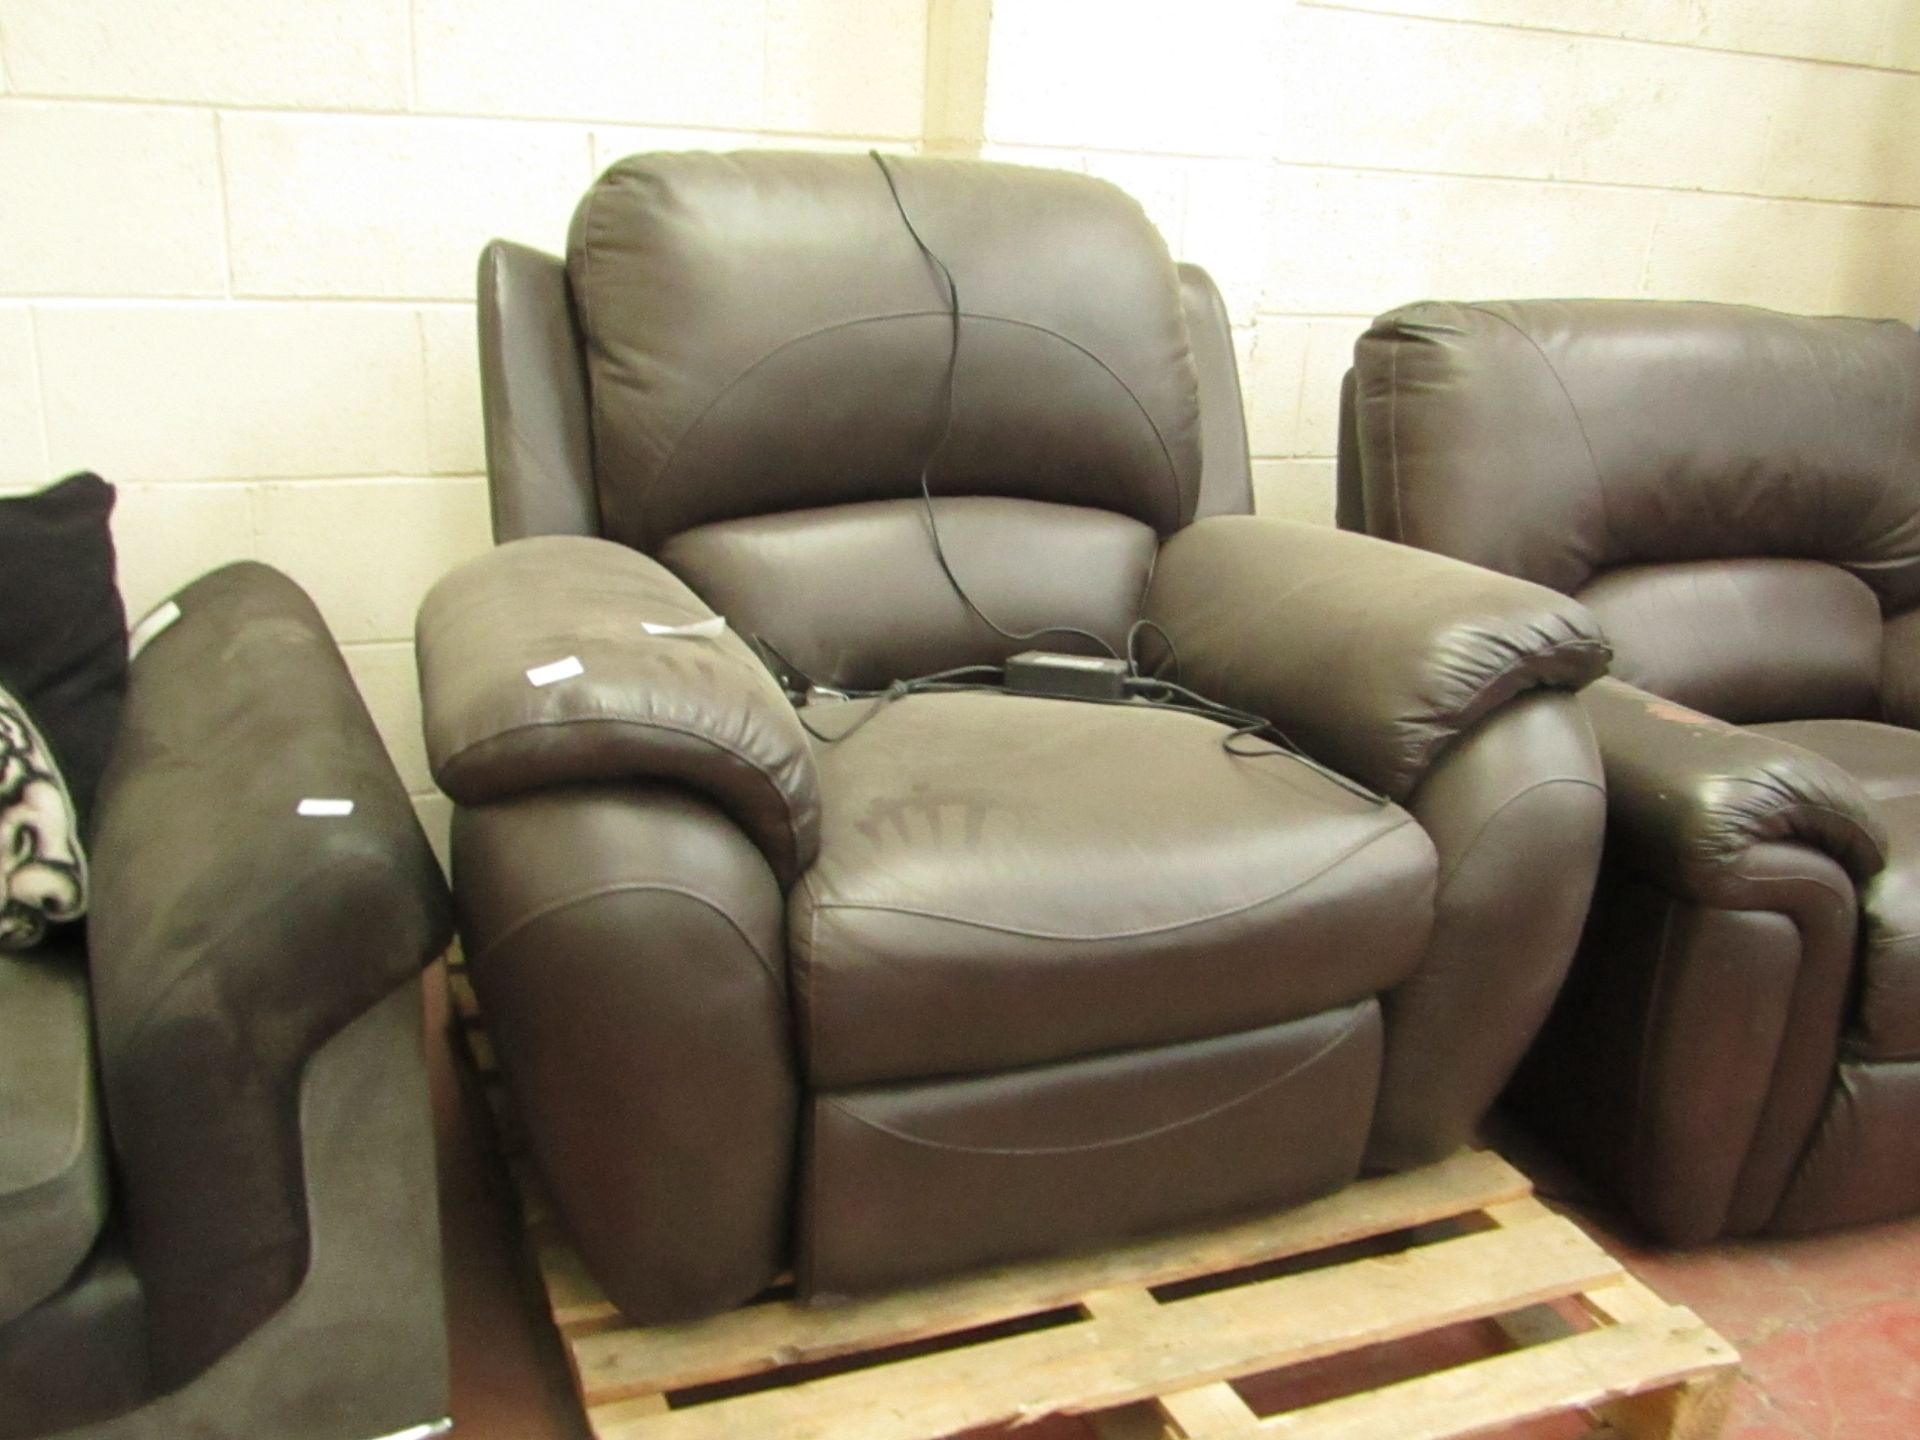 La-Z-Boy Electric reclining armchair, tested working